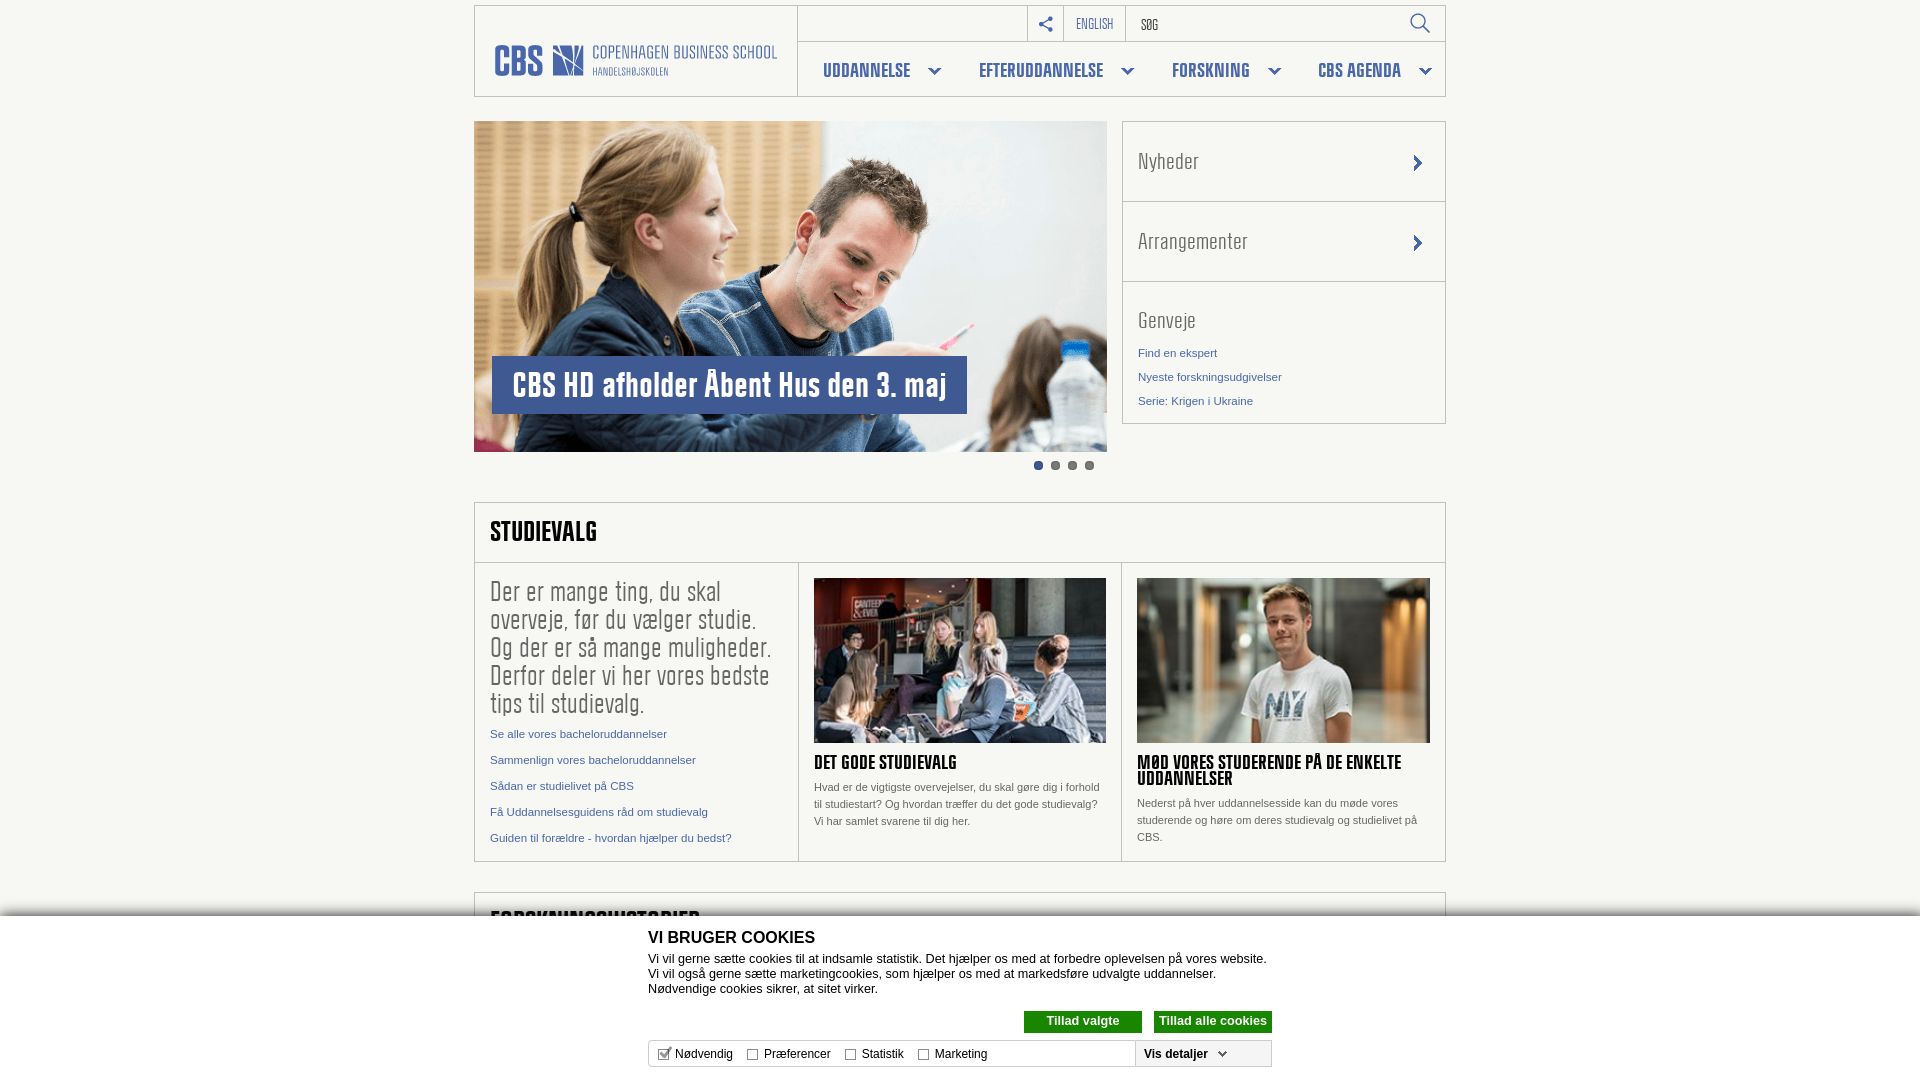 Status do site cbs.dk está   ONLINE